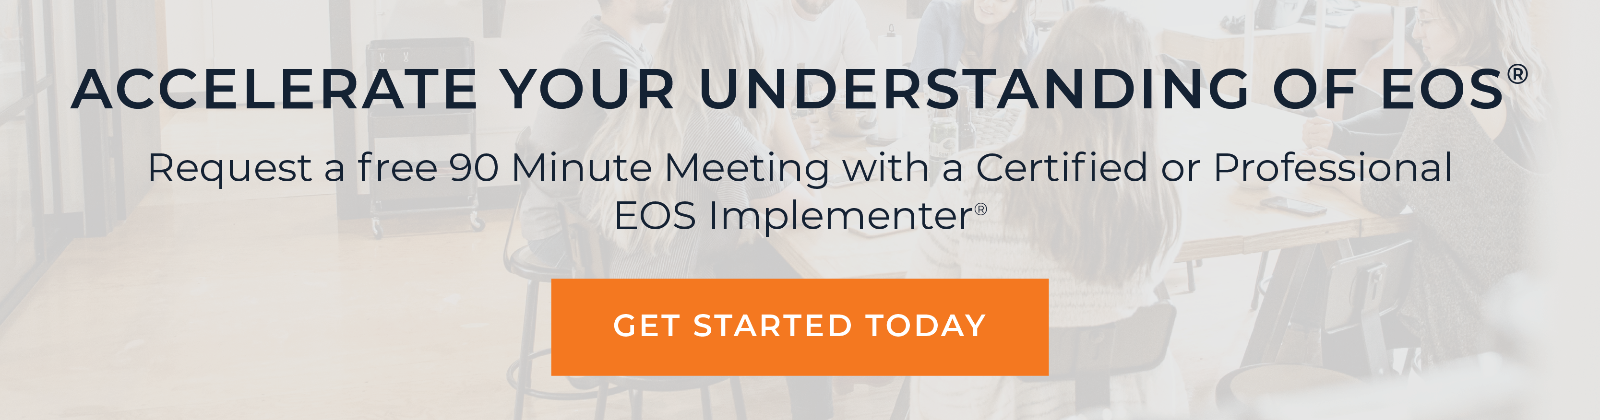 Accelerate your understanding of EOS